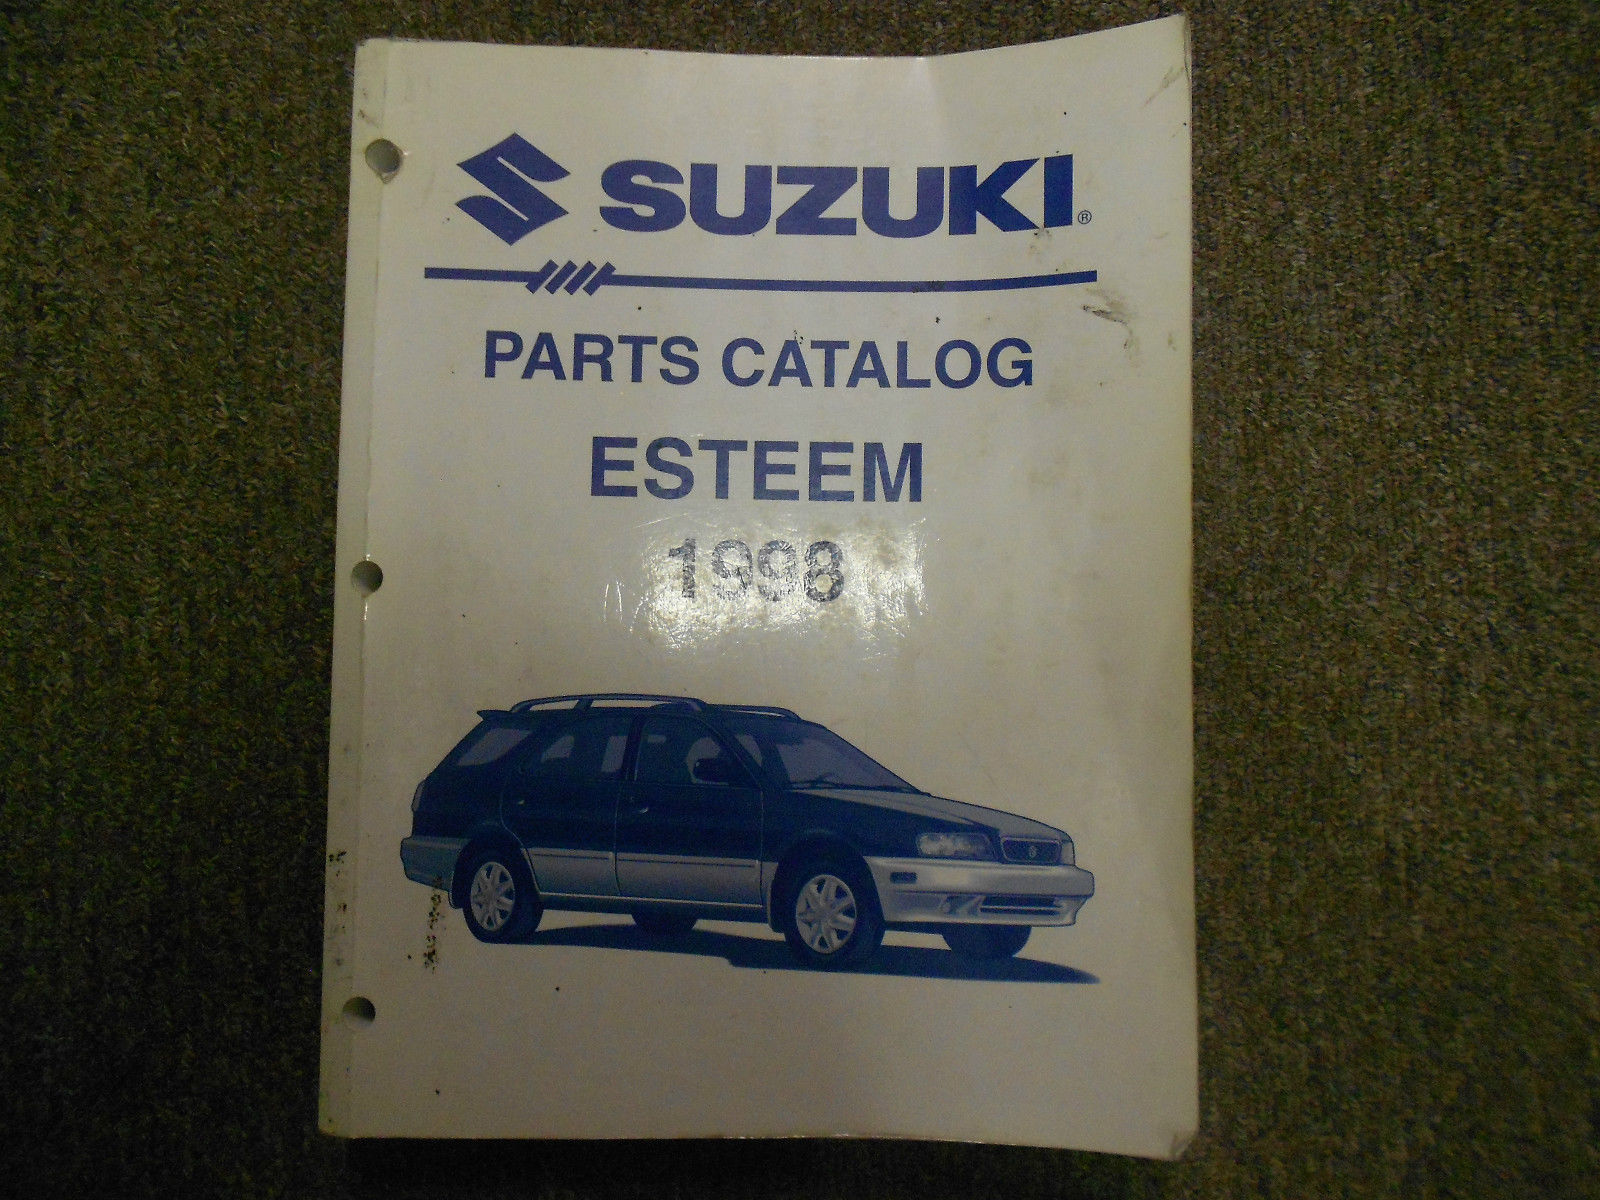 1998 Suzuki Esteem Parts Catalog Shop Manual FACTORY OEM BOOK 98 WORN STAINED - $26.11